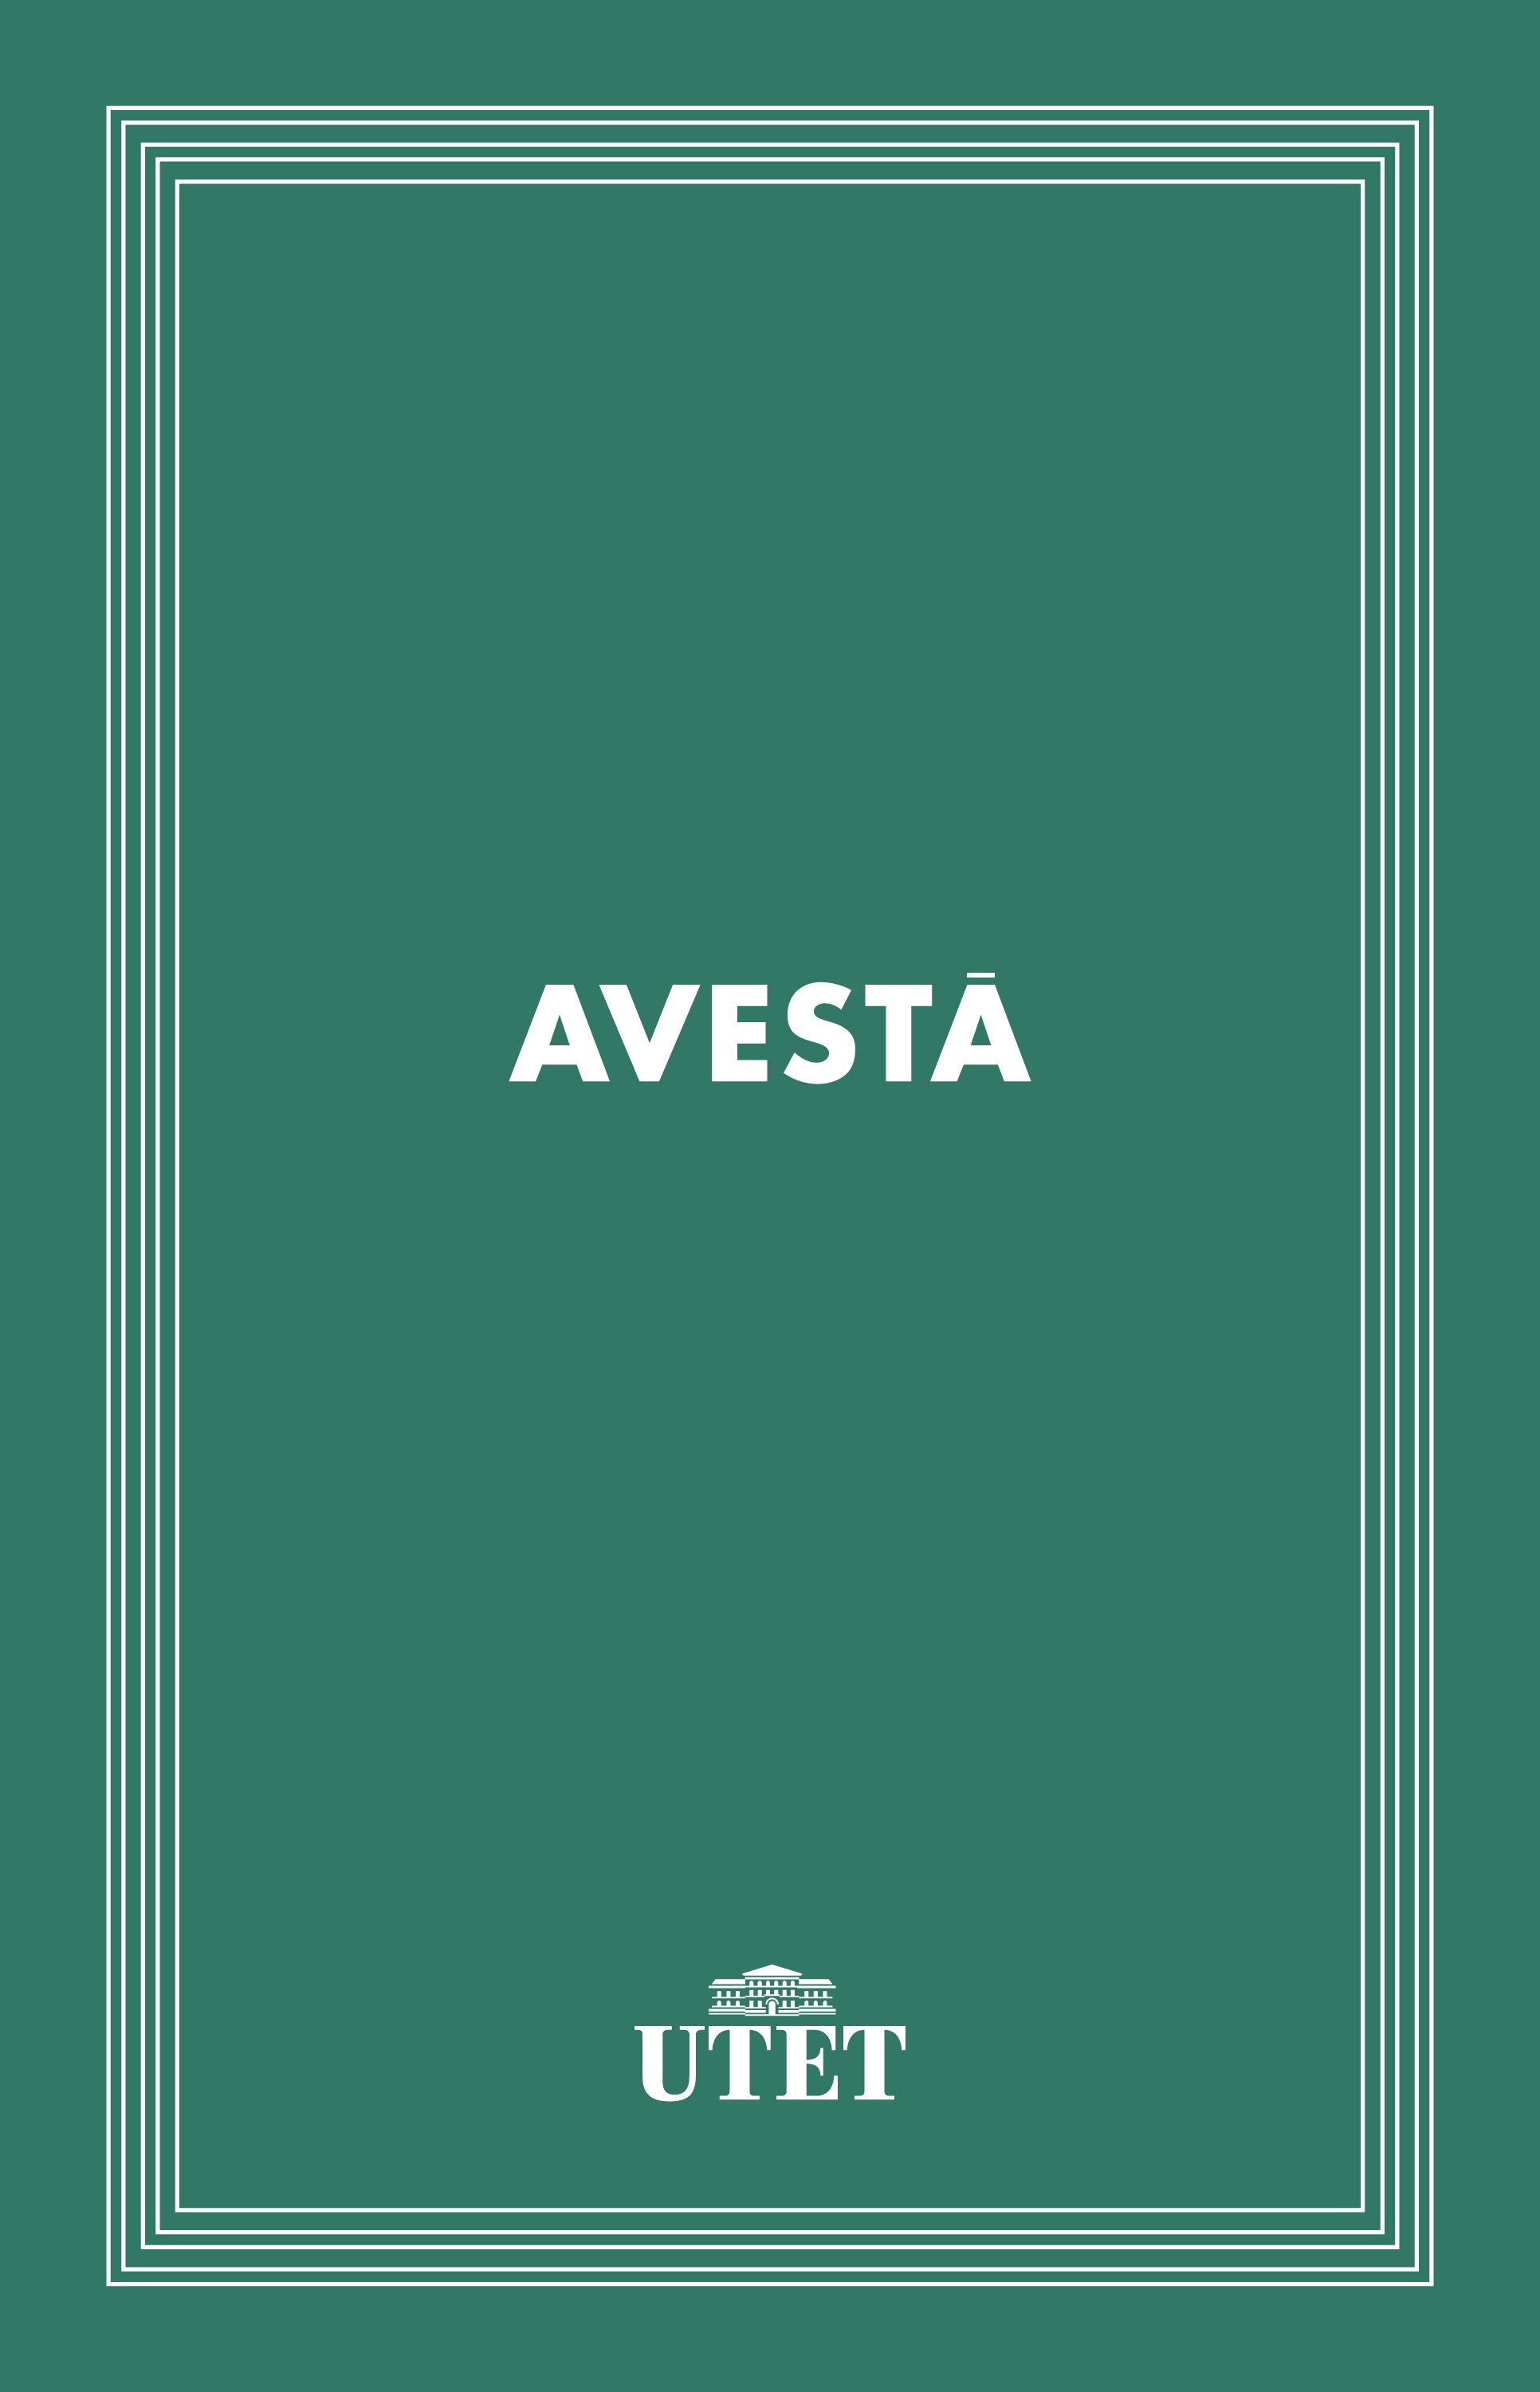 Avesta - Librerie.coop